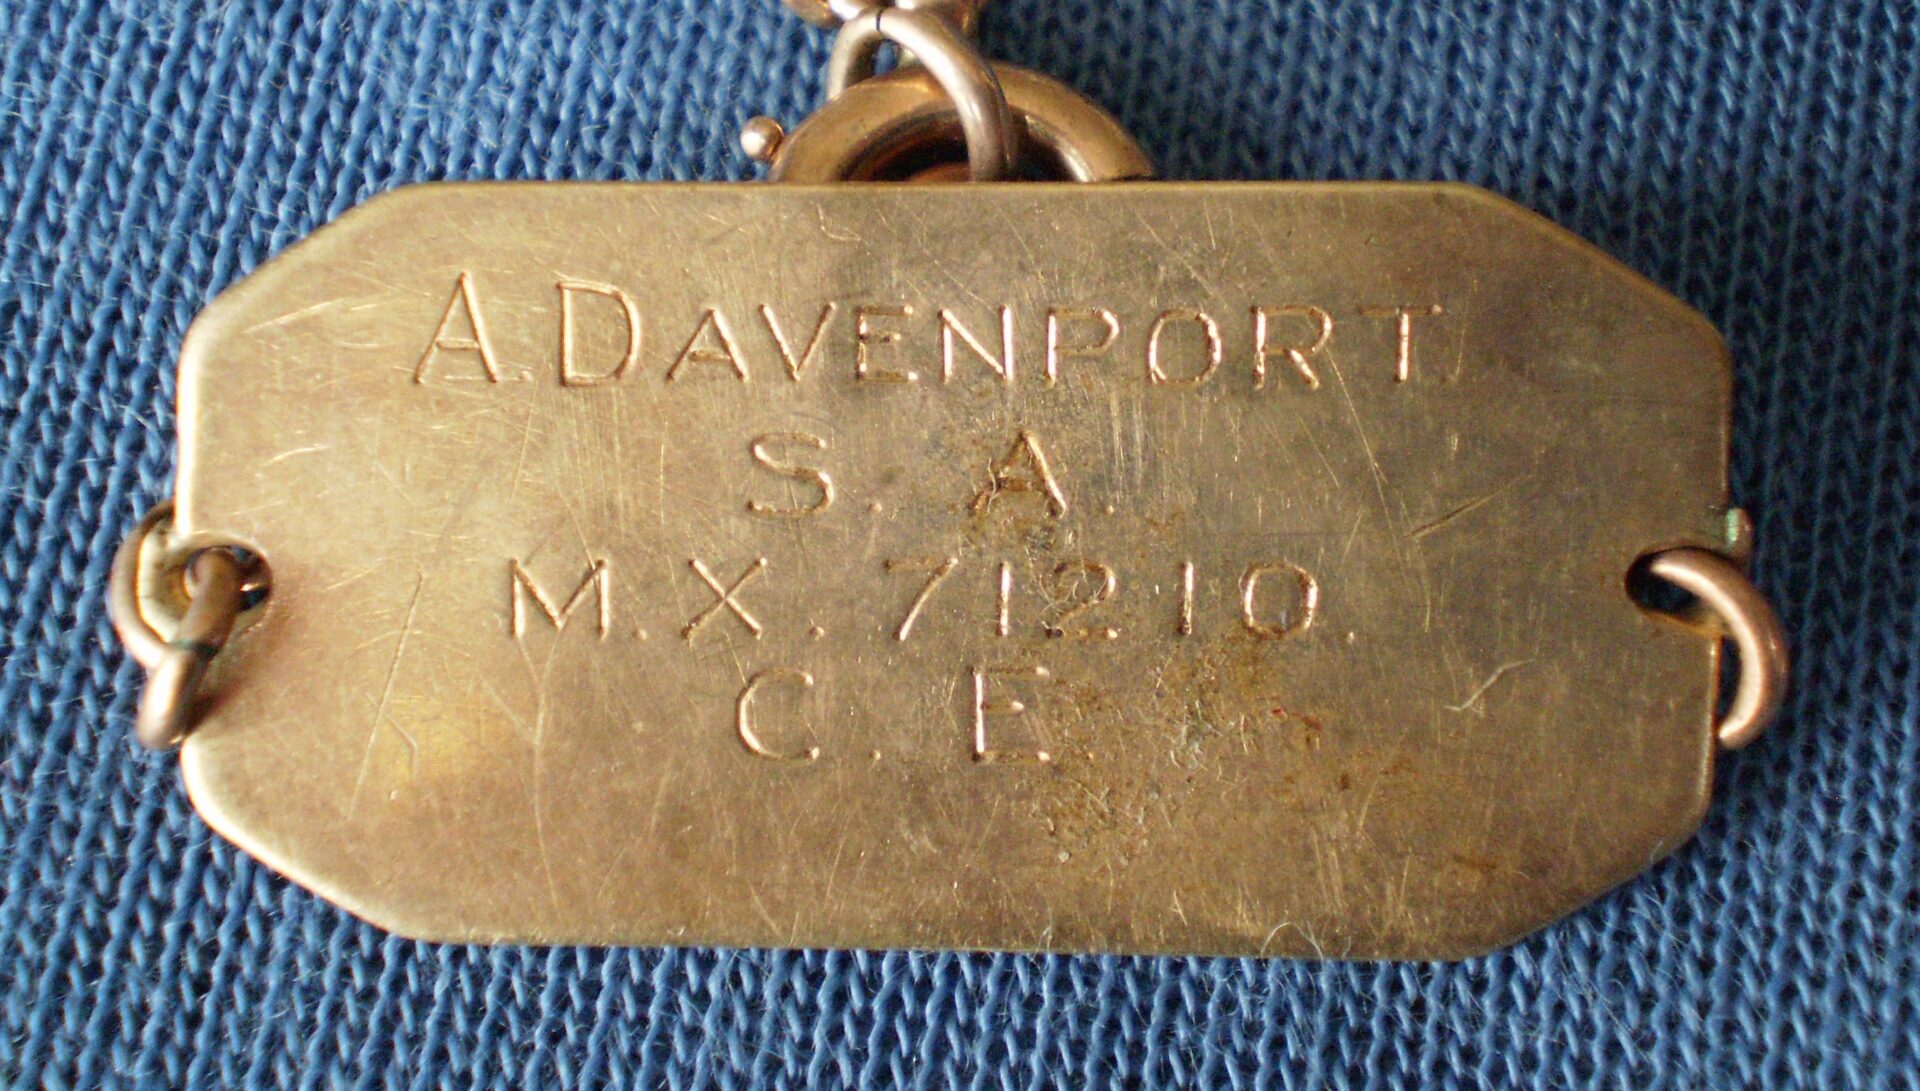 Gus Davenport metal identification plate during WW2